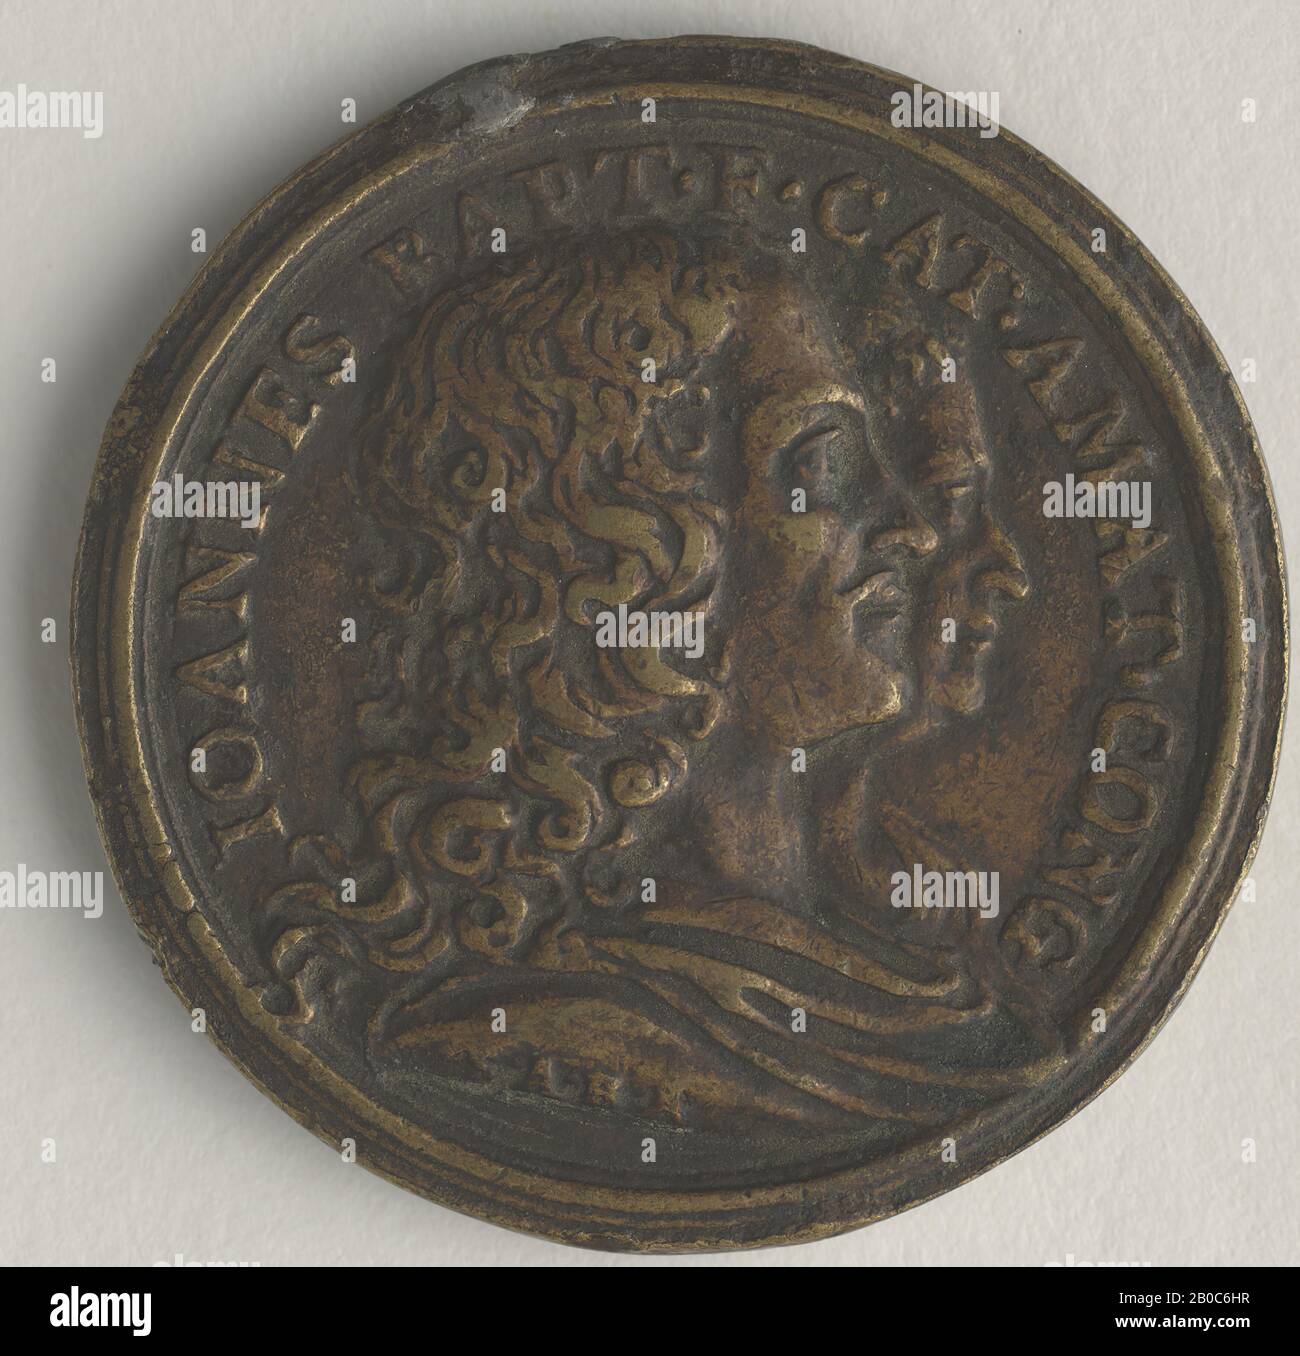 S. A. B. A. Medalist, Giovanni Battista y Caterina F?, n.d., bronce, 1 1/2 pulg. (3.8 cm.) Foto de stock